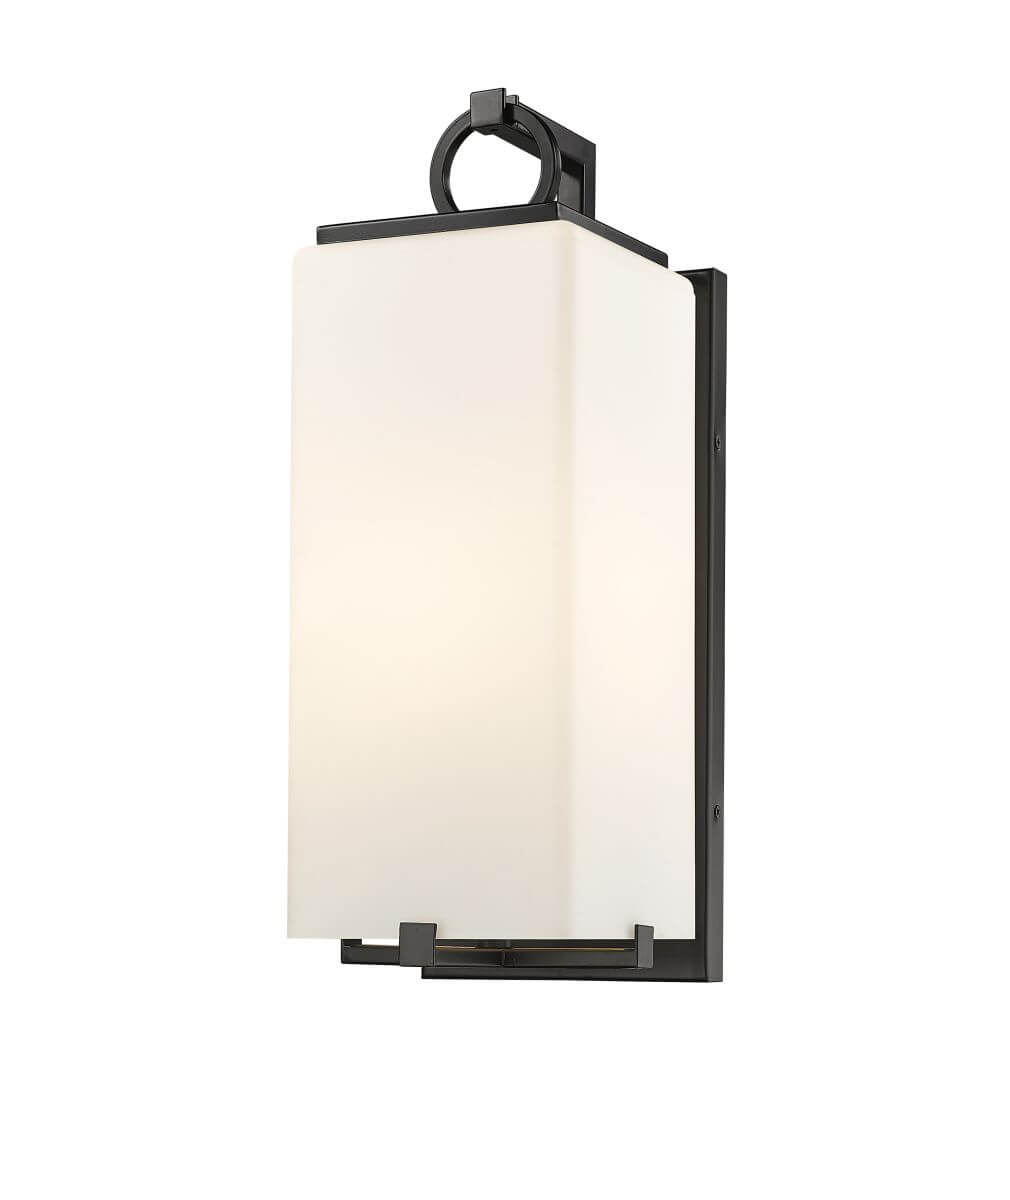 Z-Lite Lighting Sana 1 Light 19 Inch Tall Outdoor Wall Light in Black with White Opal Glass 593M-BK